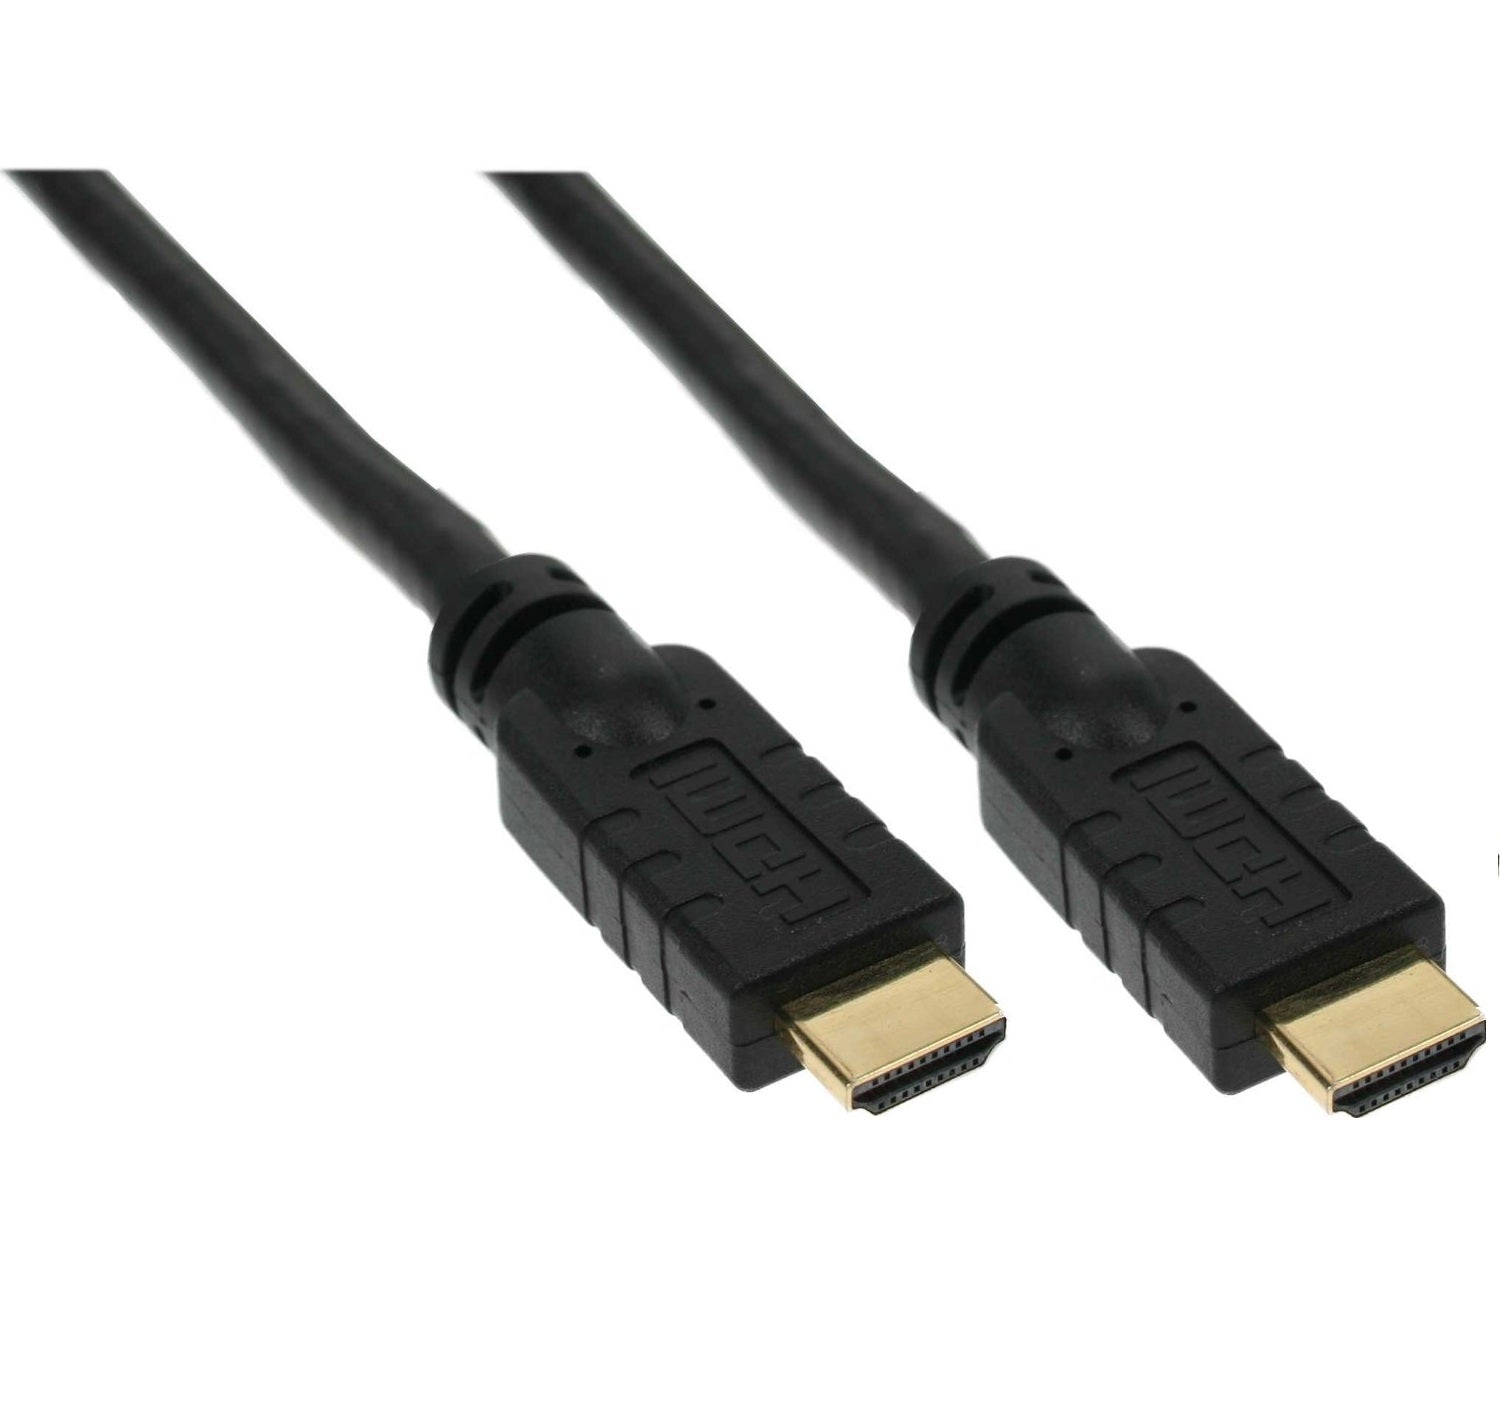 HDMI 1.4. KVM DVI HDMI. HDMI input output. Купить кабель High Speed HDMI with Ethernet. Hdmi кабель версии 1.4